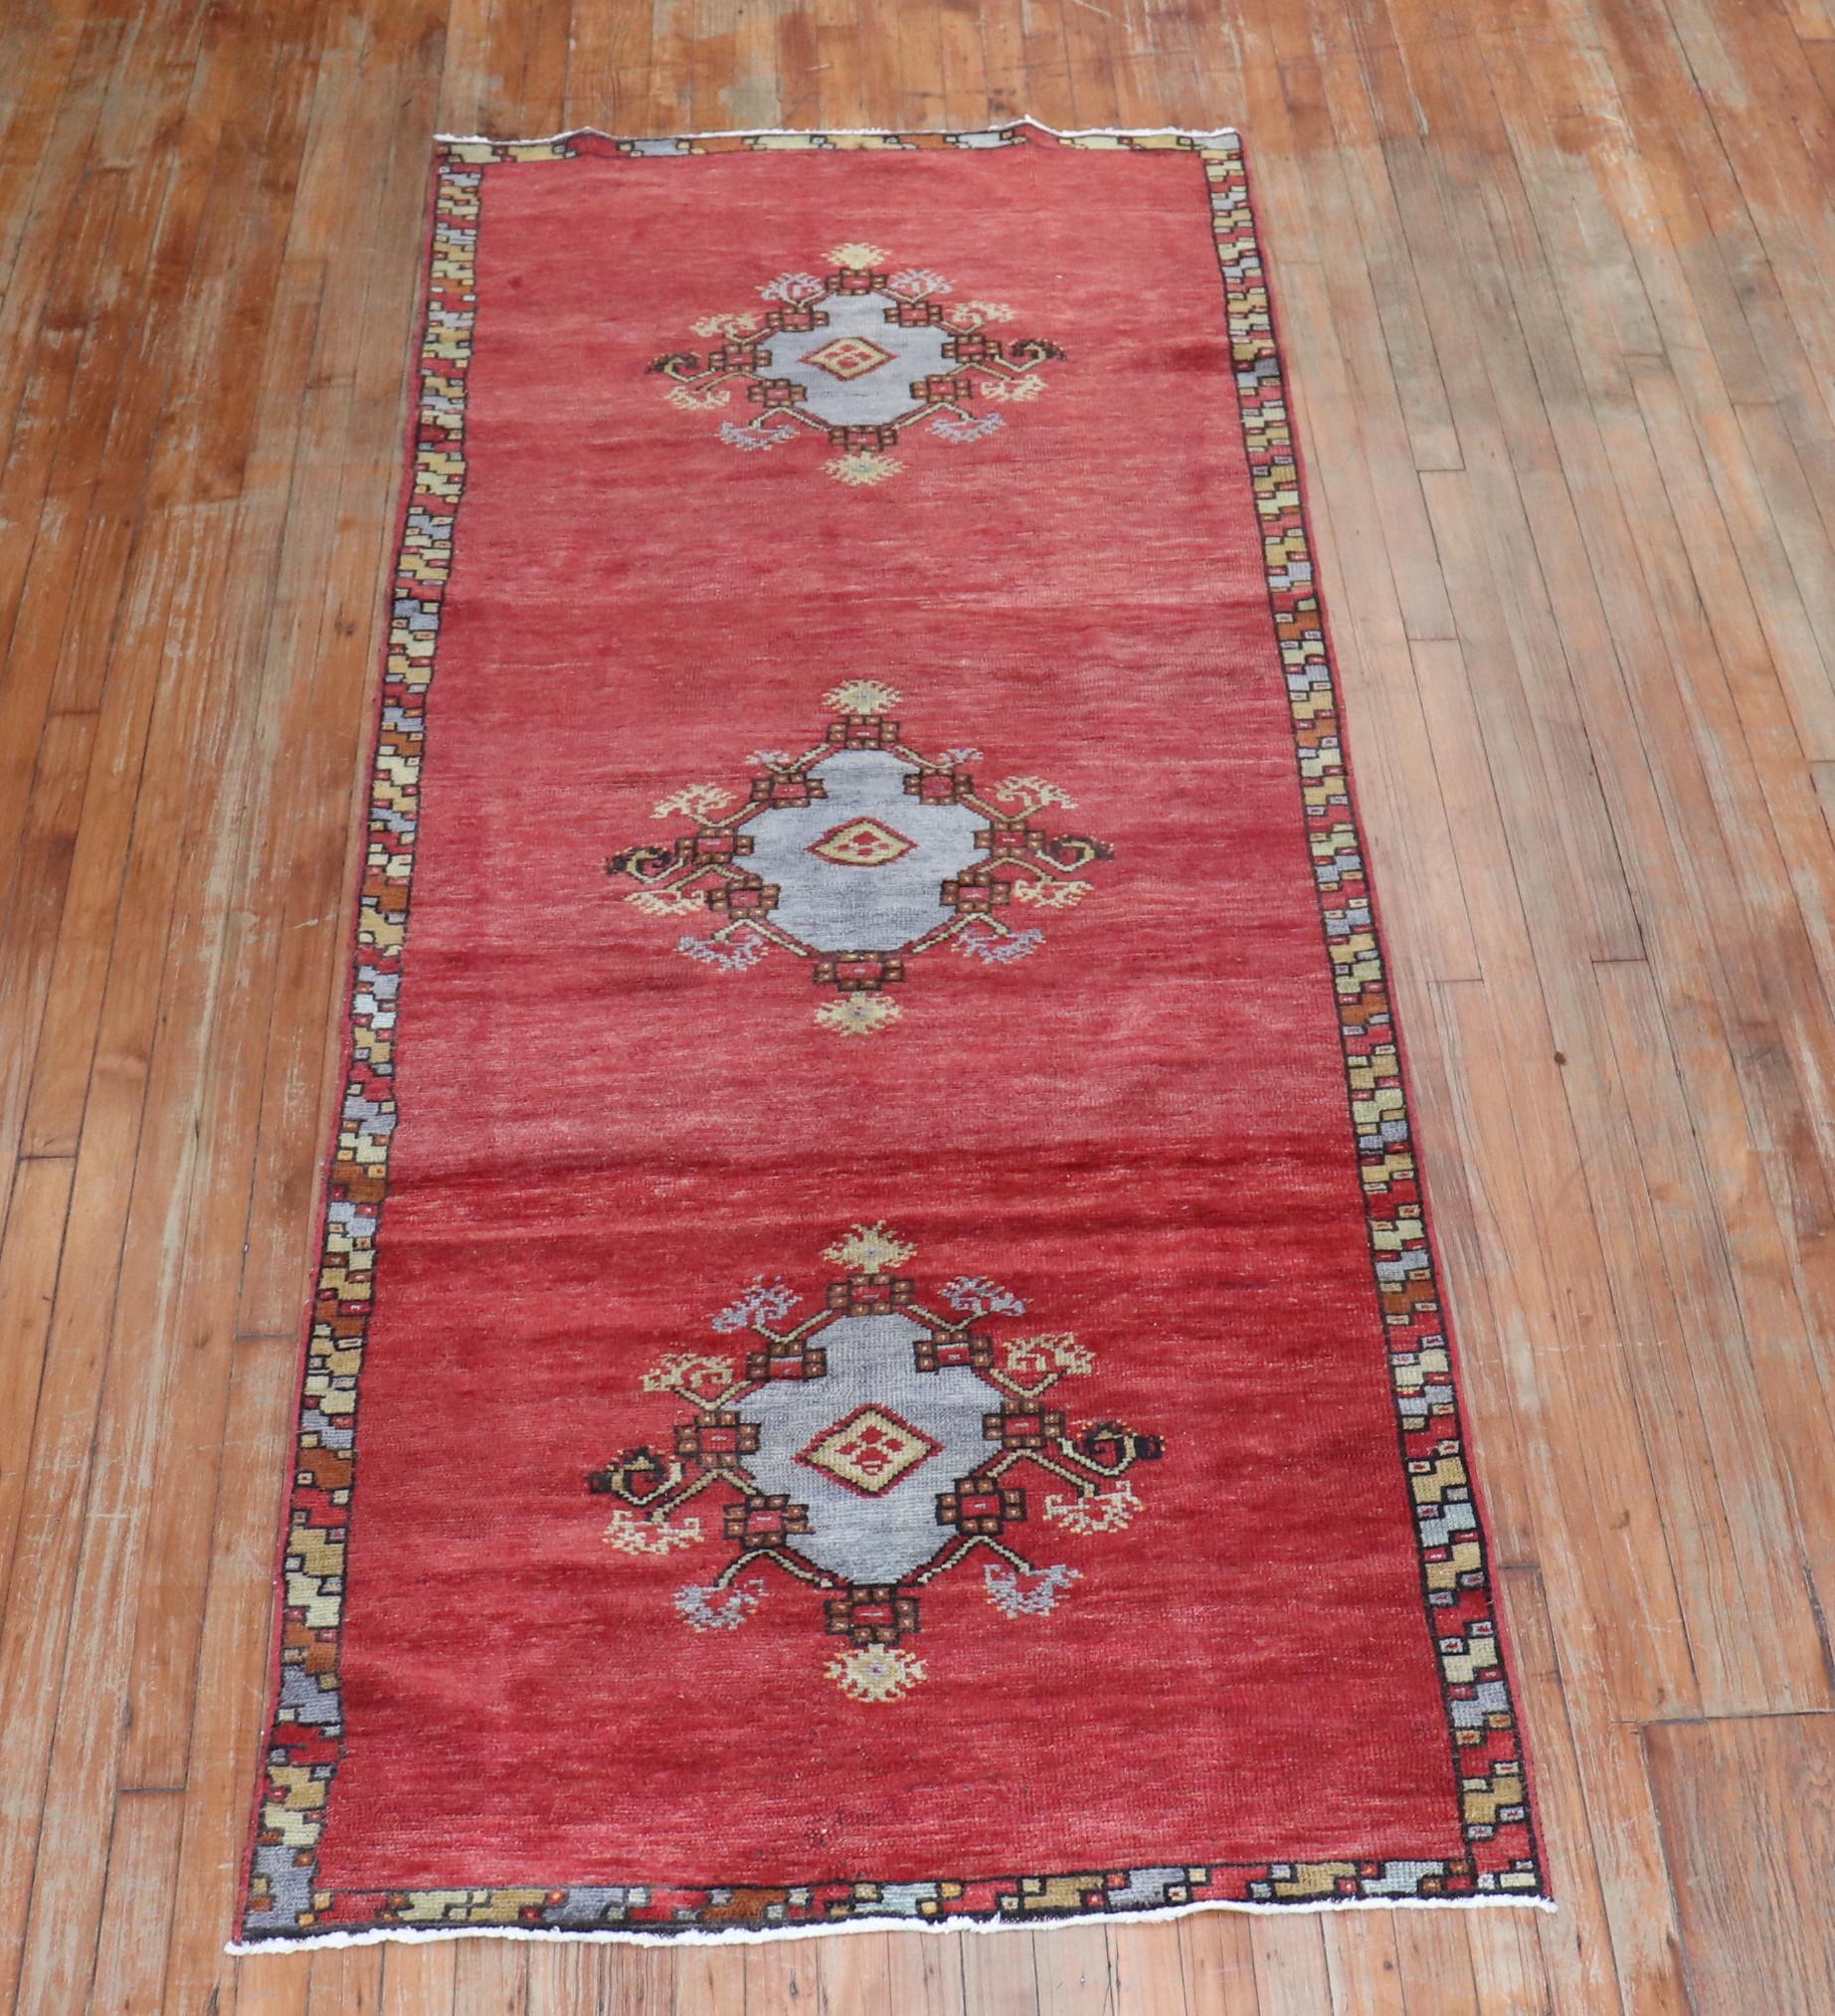 Vintage Rug 40x103 inches Red Carpet 12425 Turkish Rug Home Decor Carpet Runner Carpet Anatolian Stair Carpet